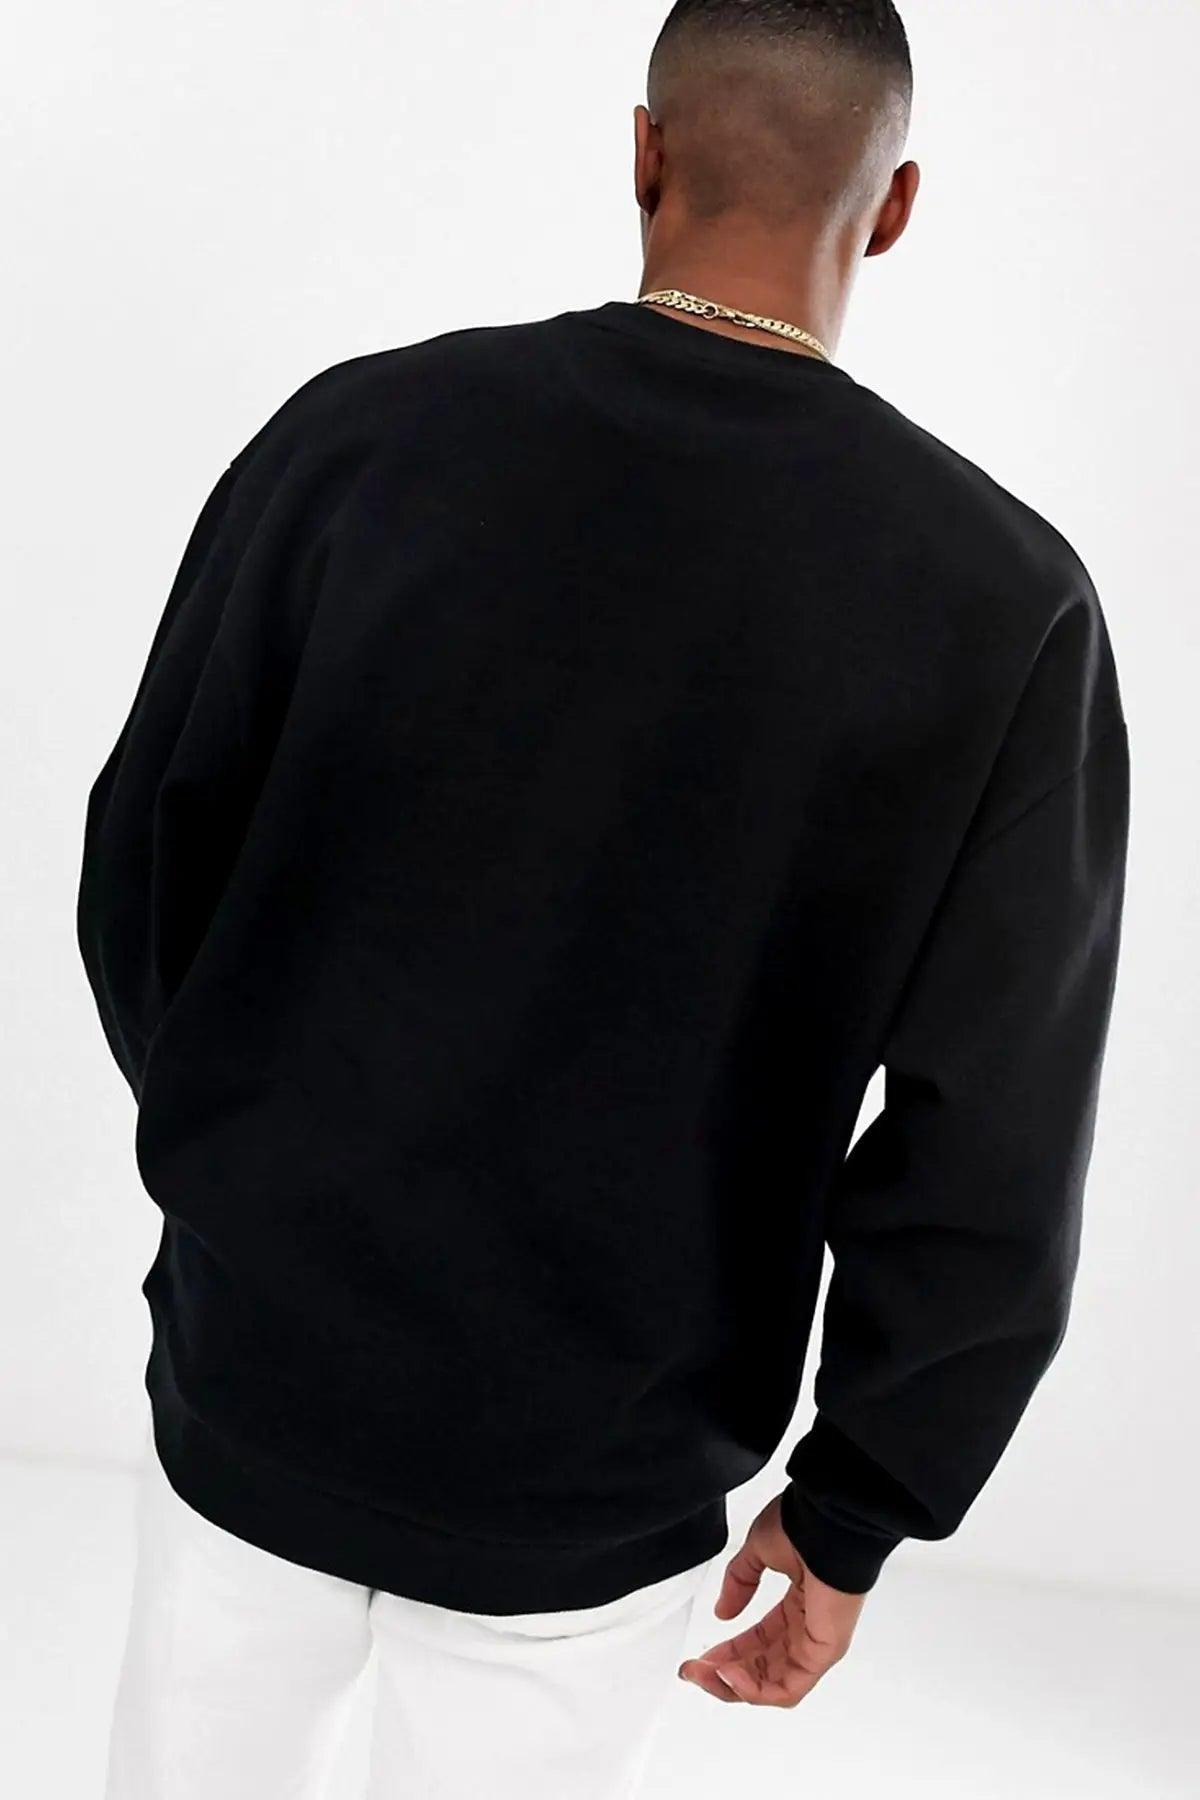 Antique Series 3 Oversize Erkek Sweatshirt - PΛSΛGE